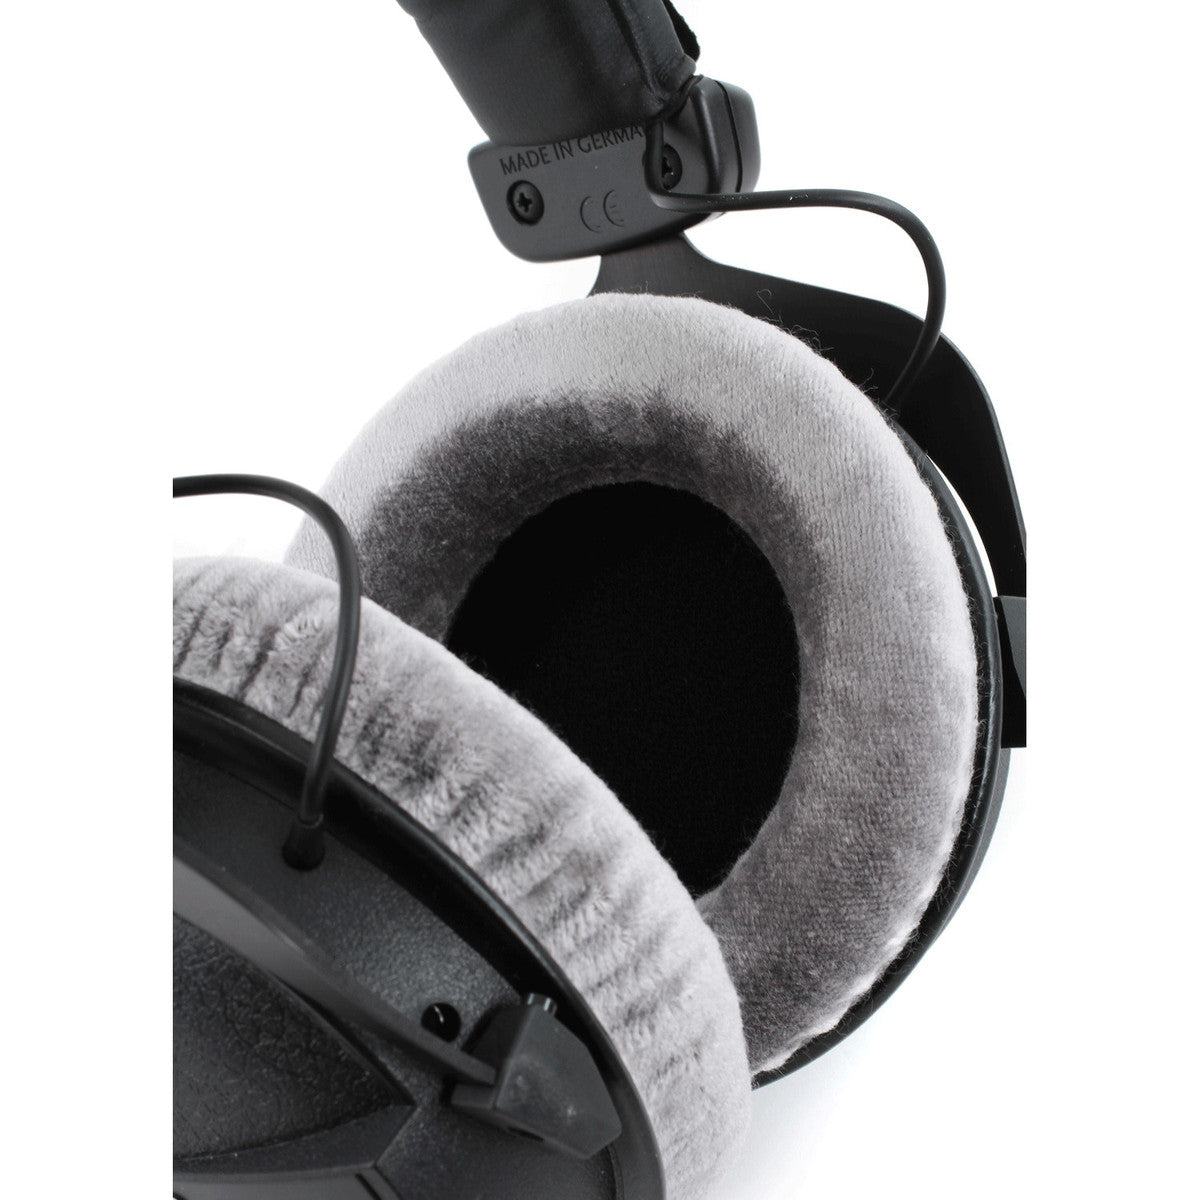 Beyerdynamic DT 770 Pro 250 ohm Studio Headphones